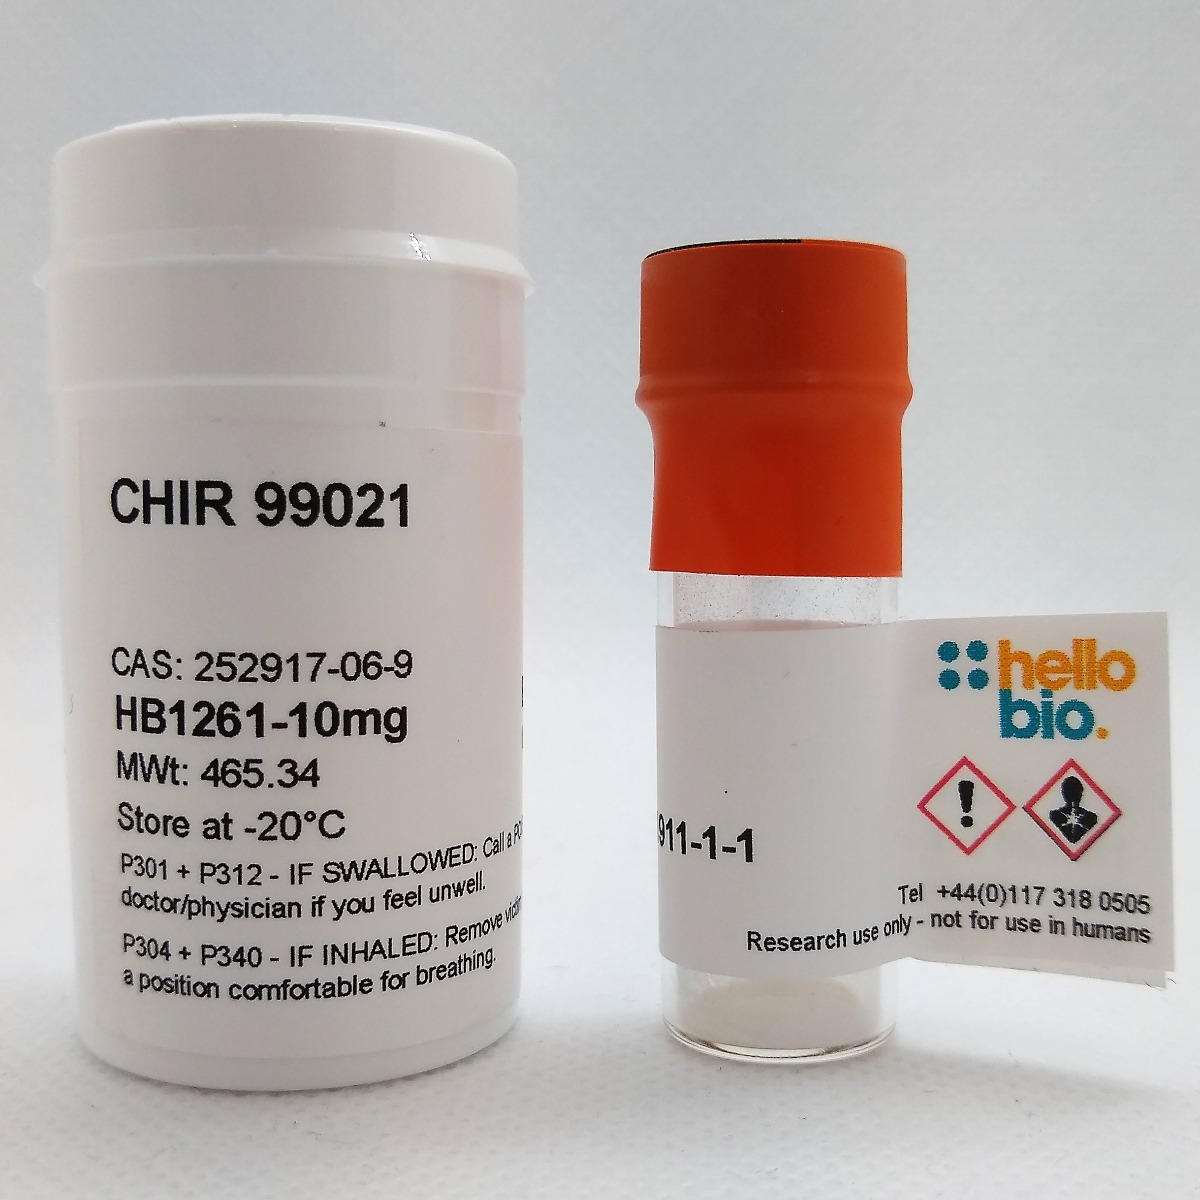 CHIR 99021 product vial image | Hello Bio